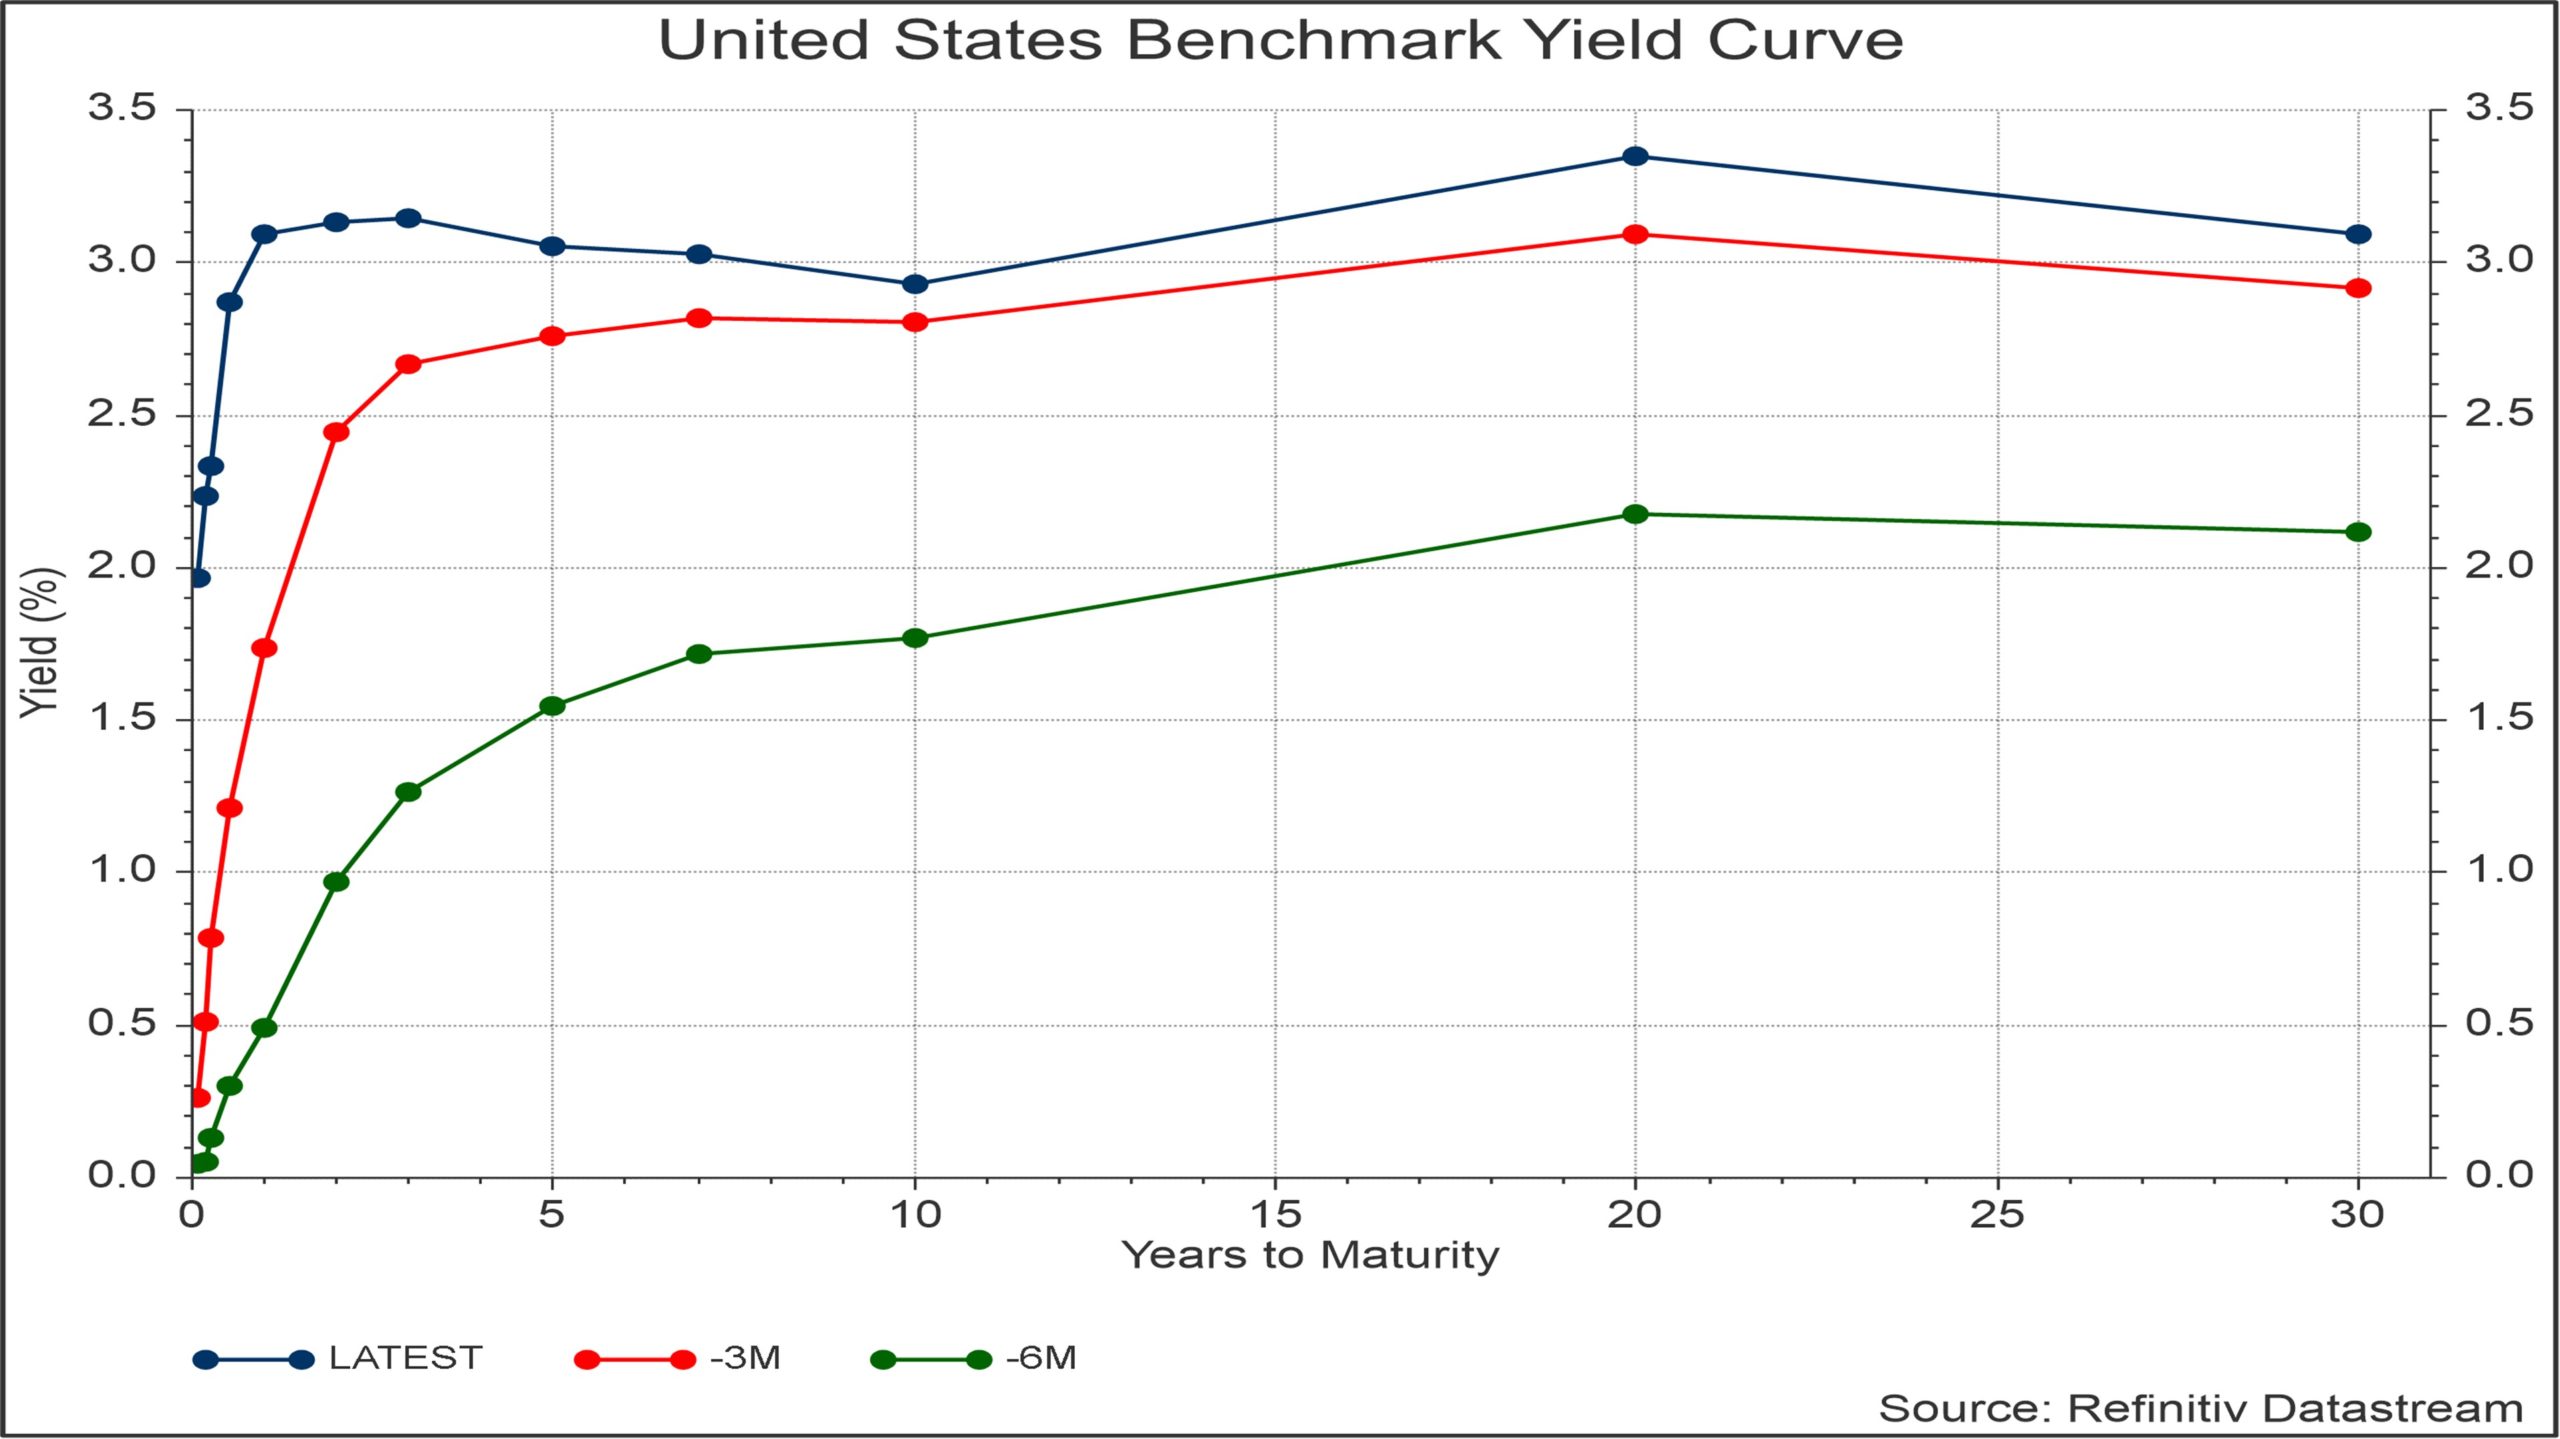 US Benchmark Yield Curve